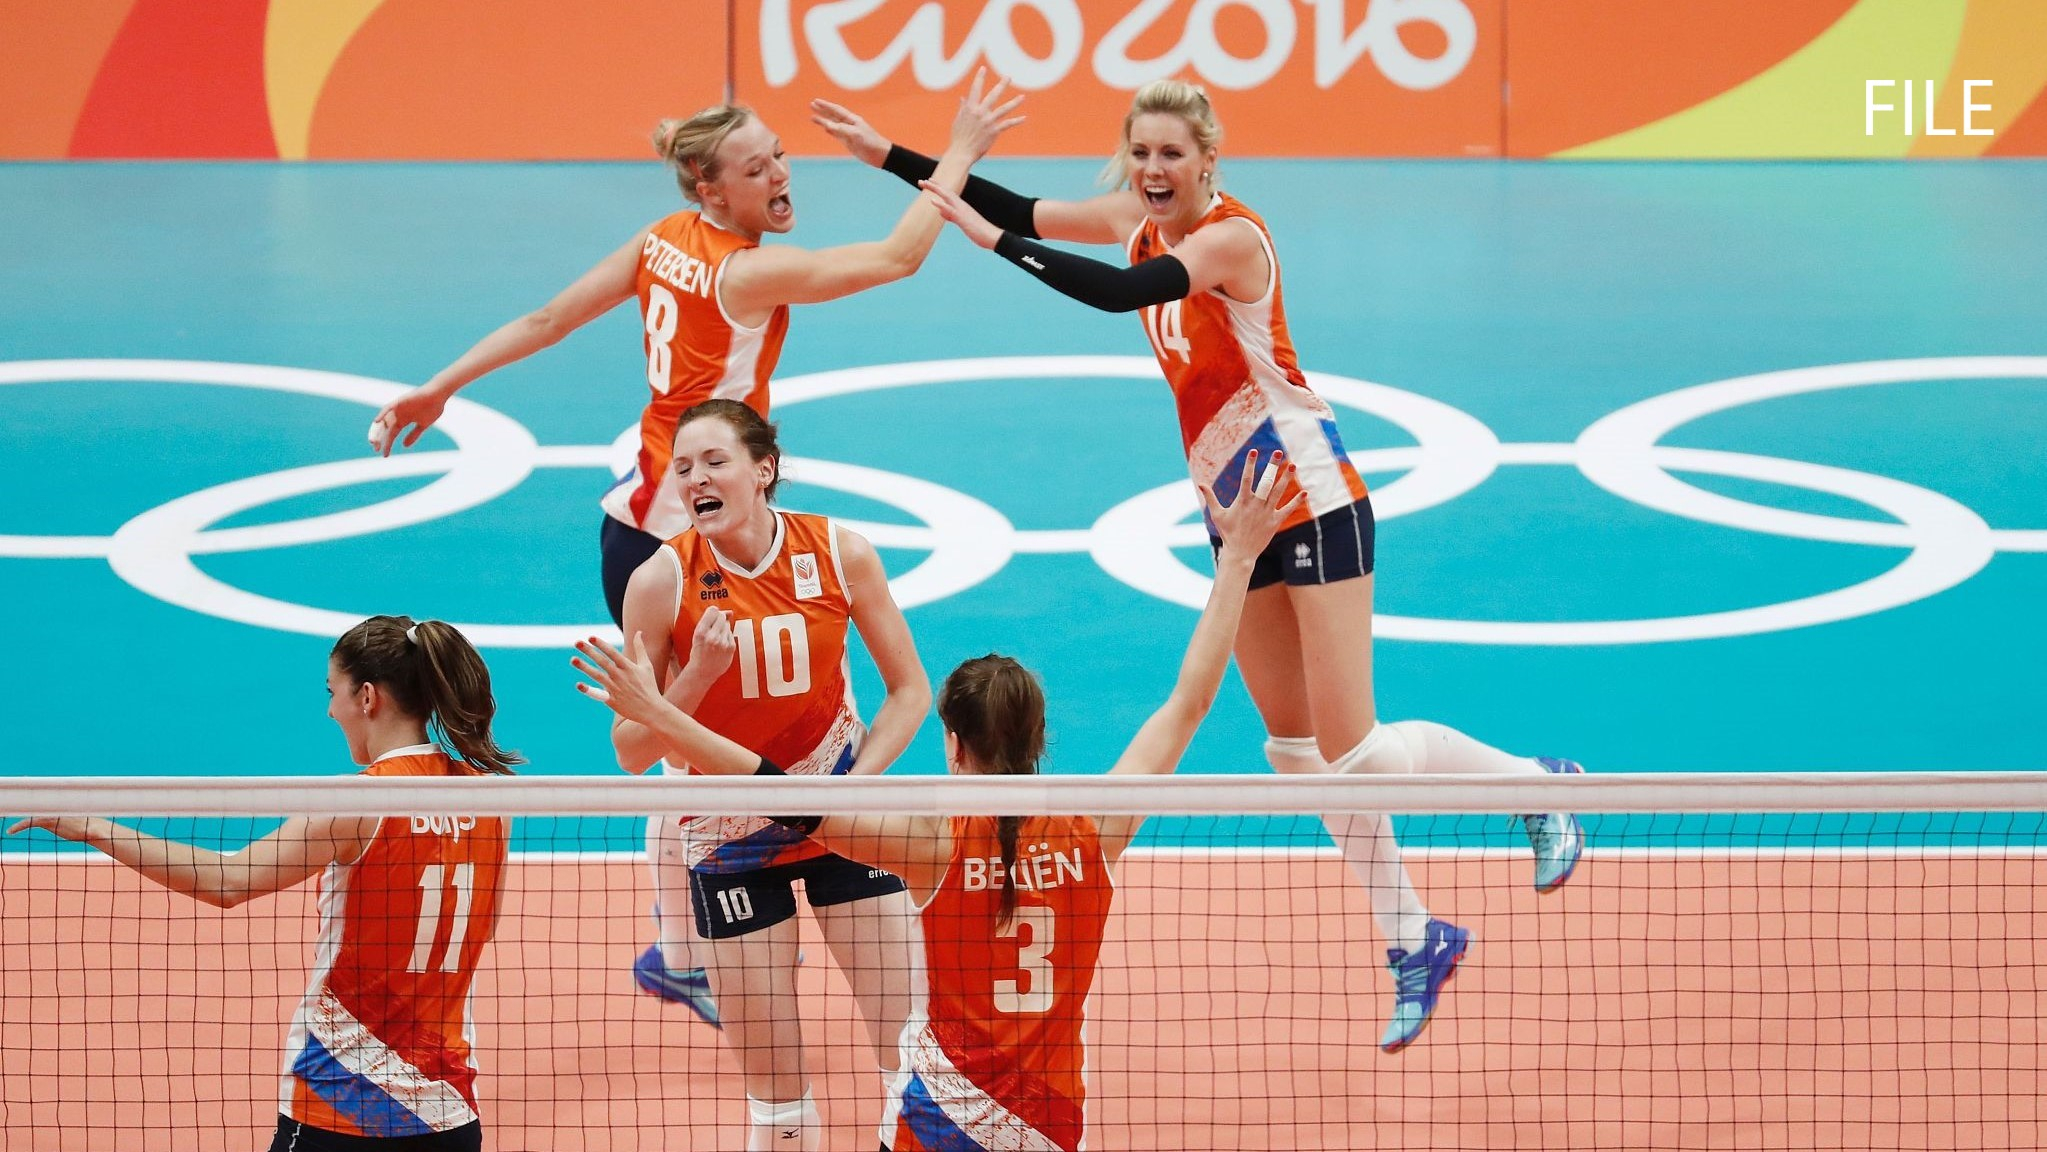 Netherlands, Poland to host 2022 Women's Volleyball Championship CGTN